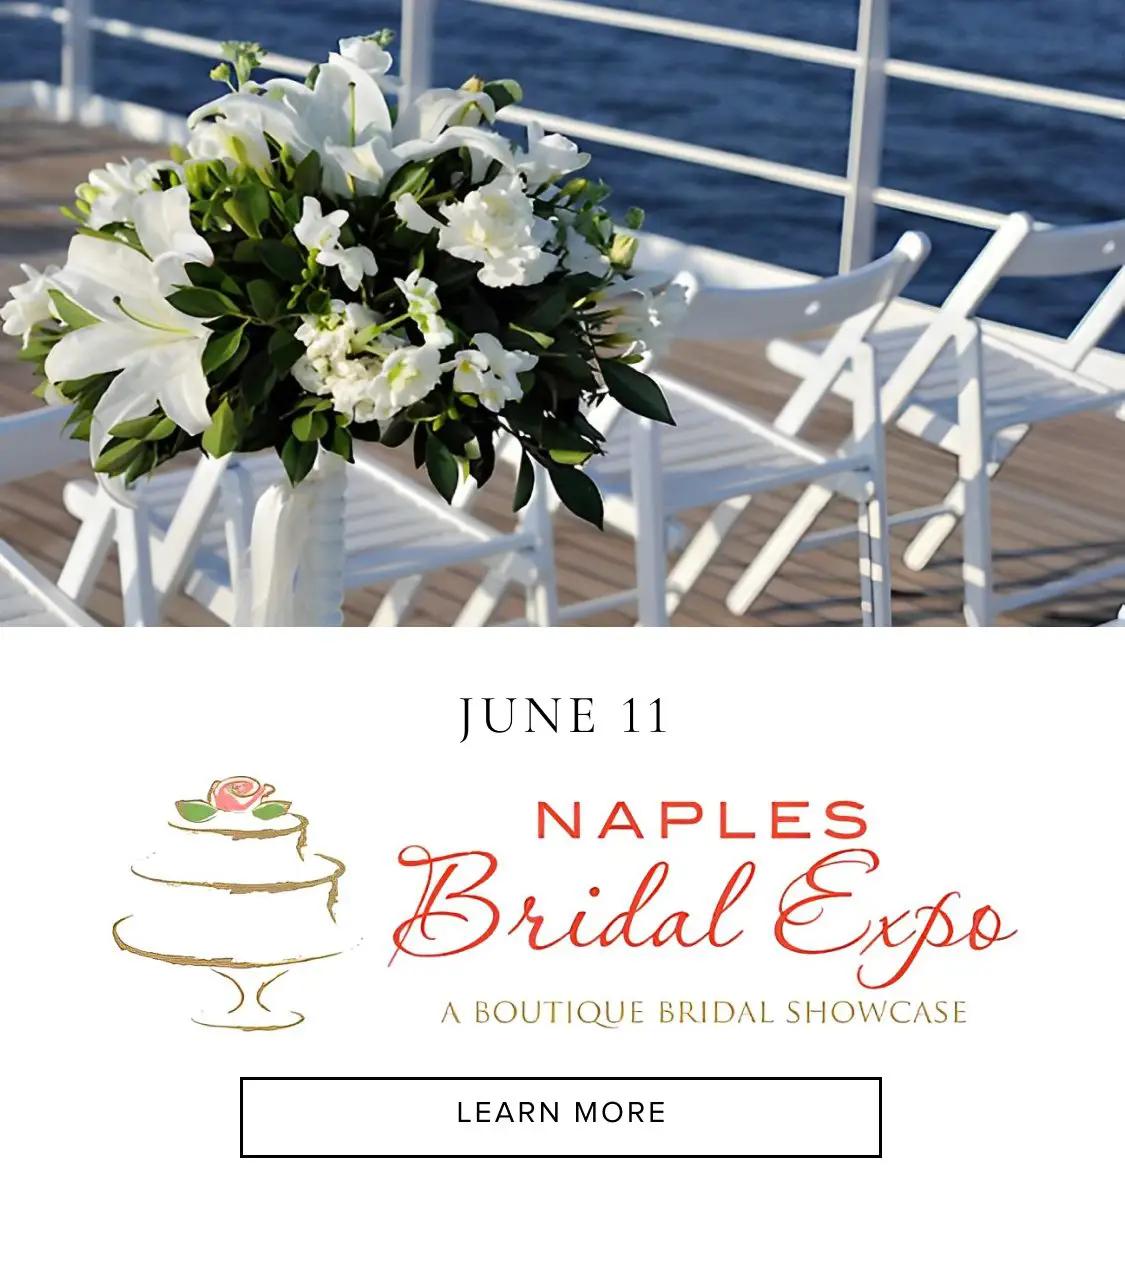 "Naples Bridal Expo" banner for mobile